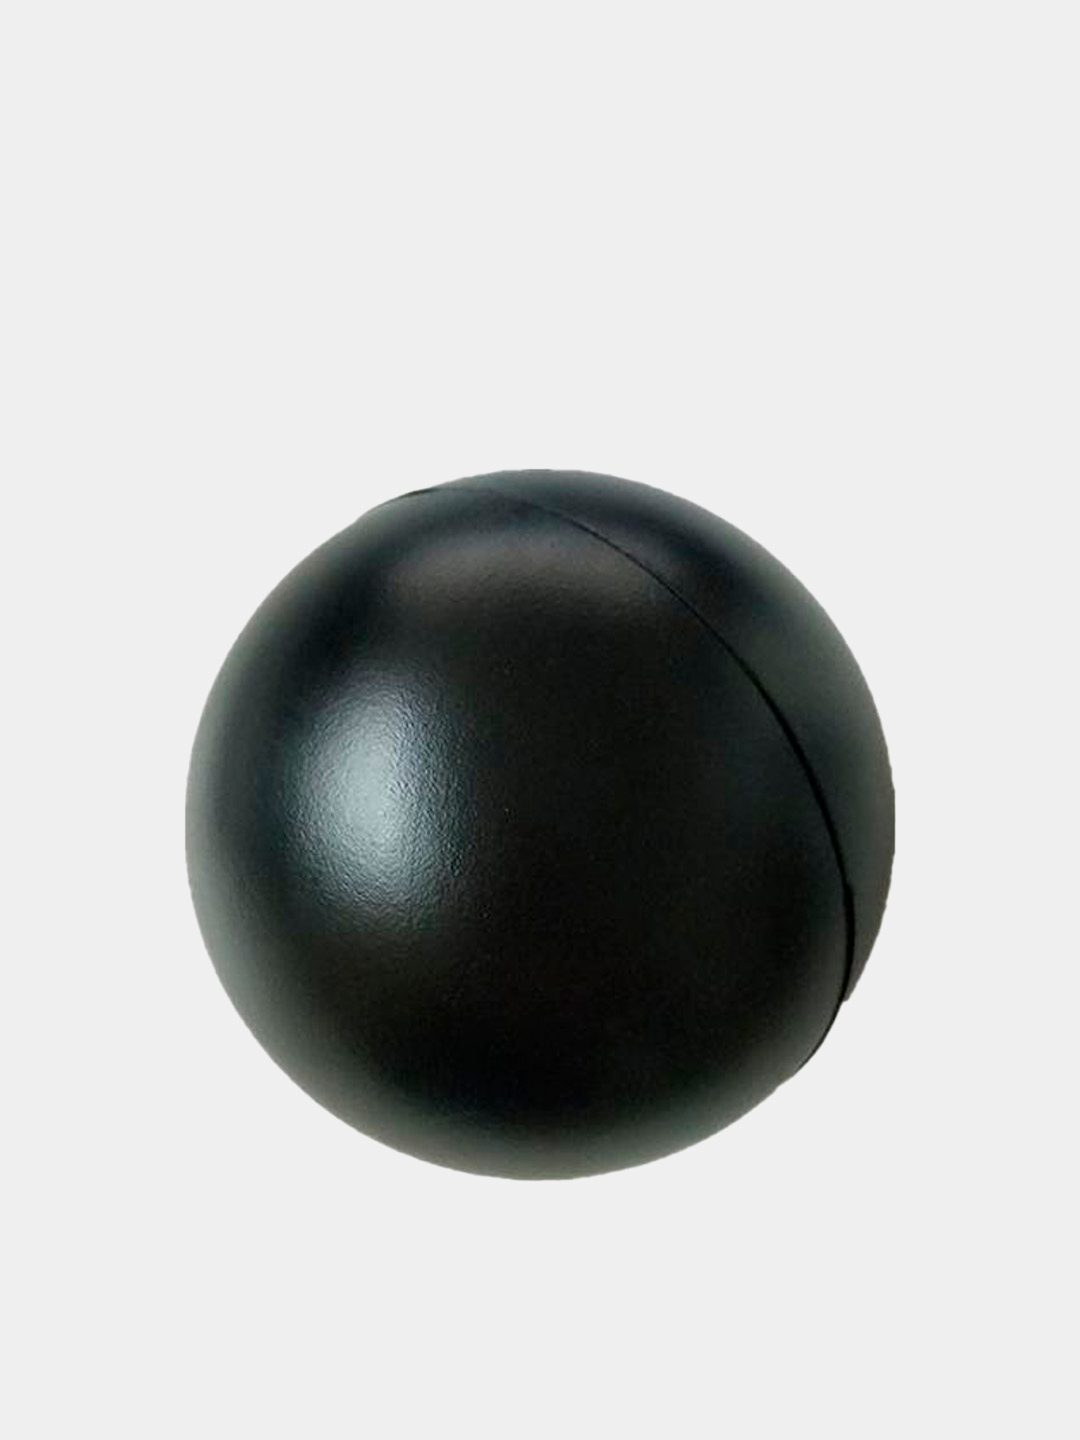 Мяч для метания резиновый. Мяч для метания 150 гр. Толкание мяча. Малый мяч для метания.